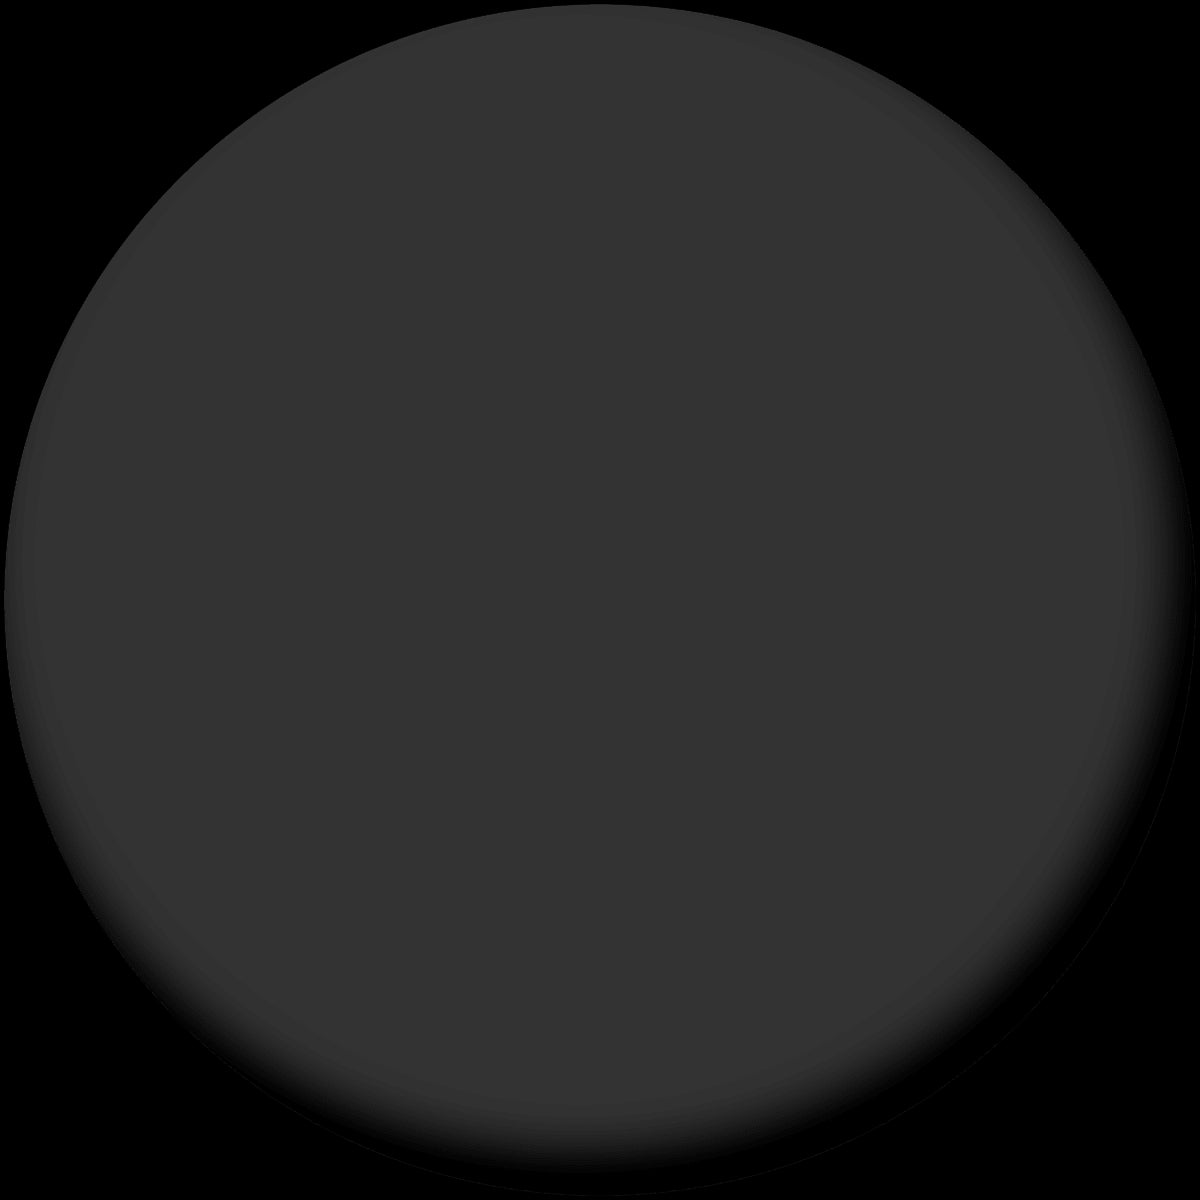 LUXENS BLACK SATIN INTERIOR ENAMEL 125 ML